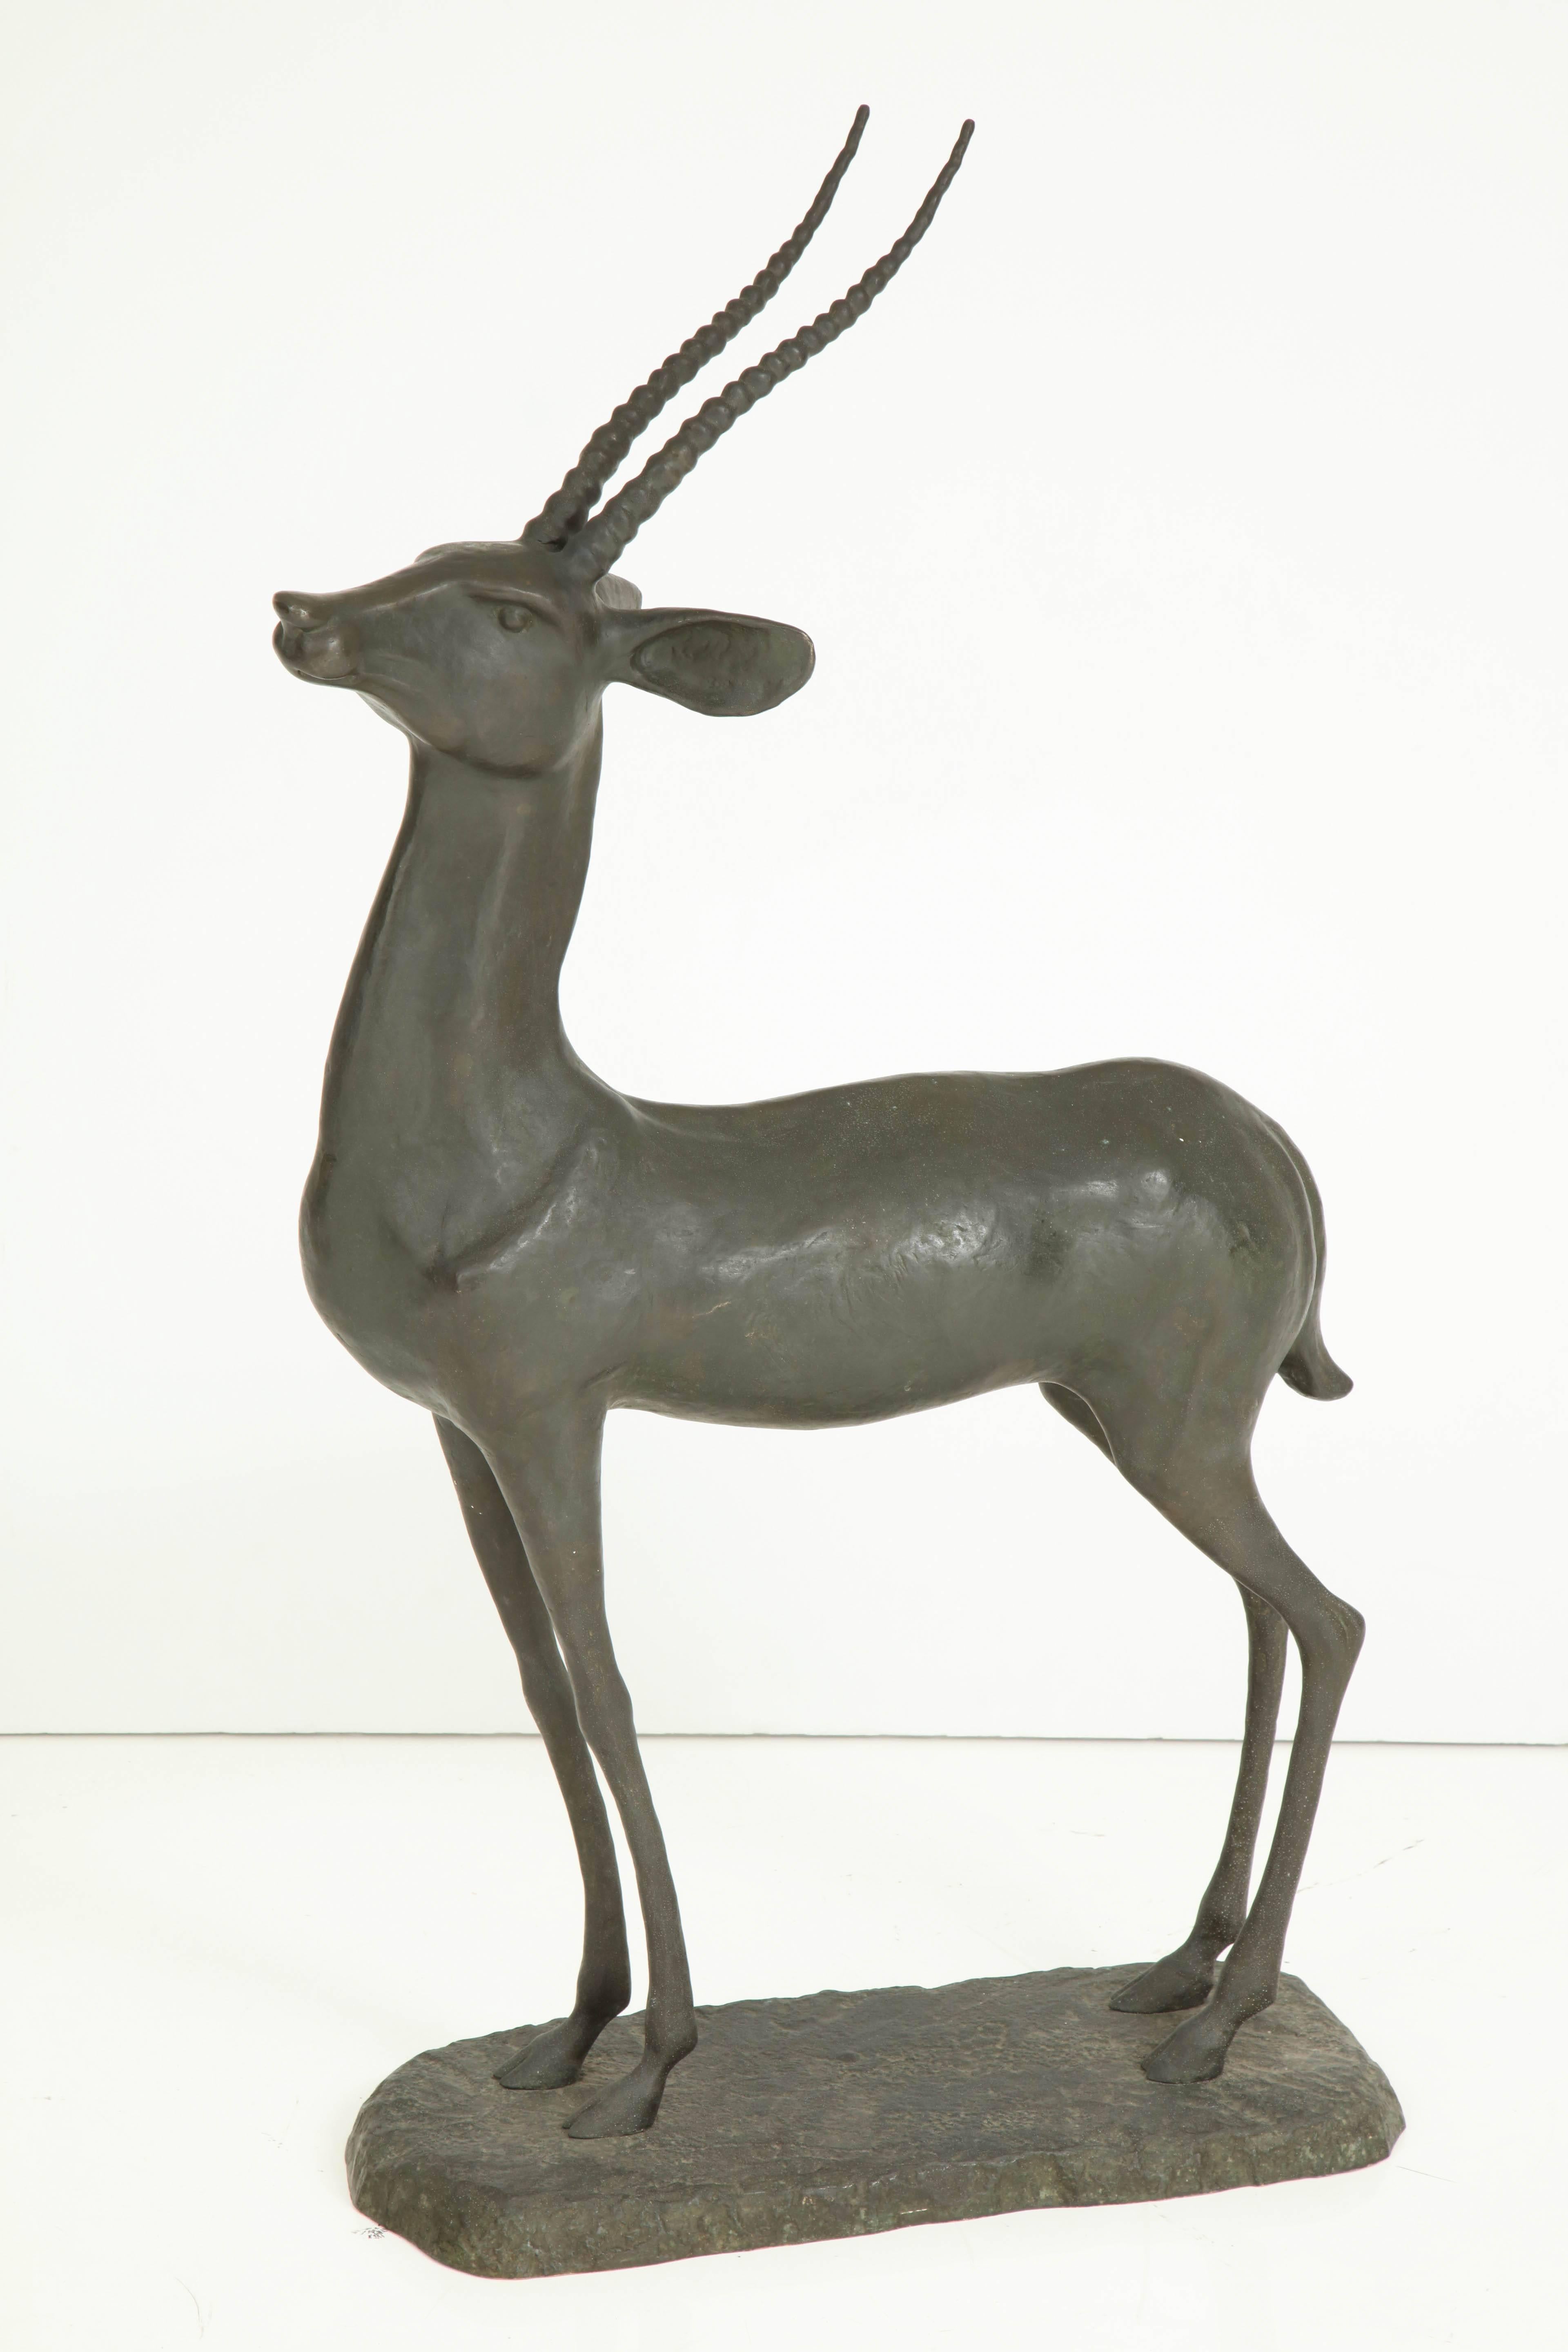 1950s Art Deco style bronze gazelle having alert posture and elegant legs, all standing on a naturalistic base.